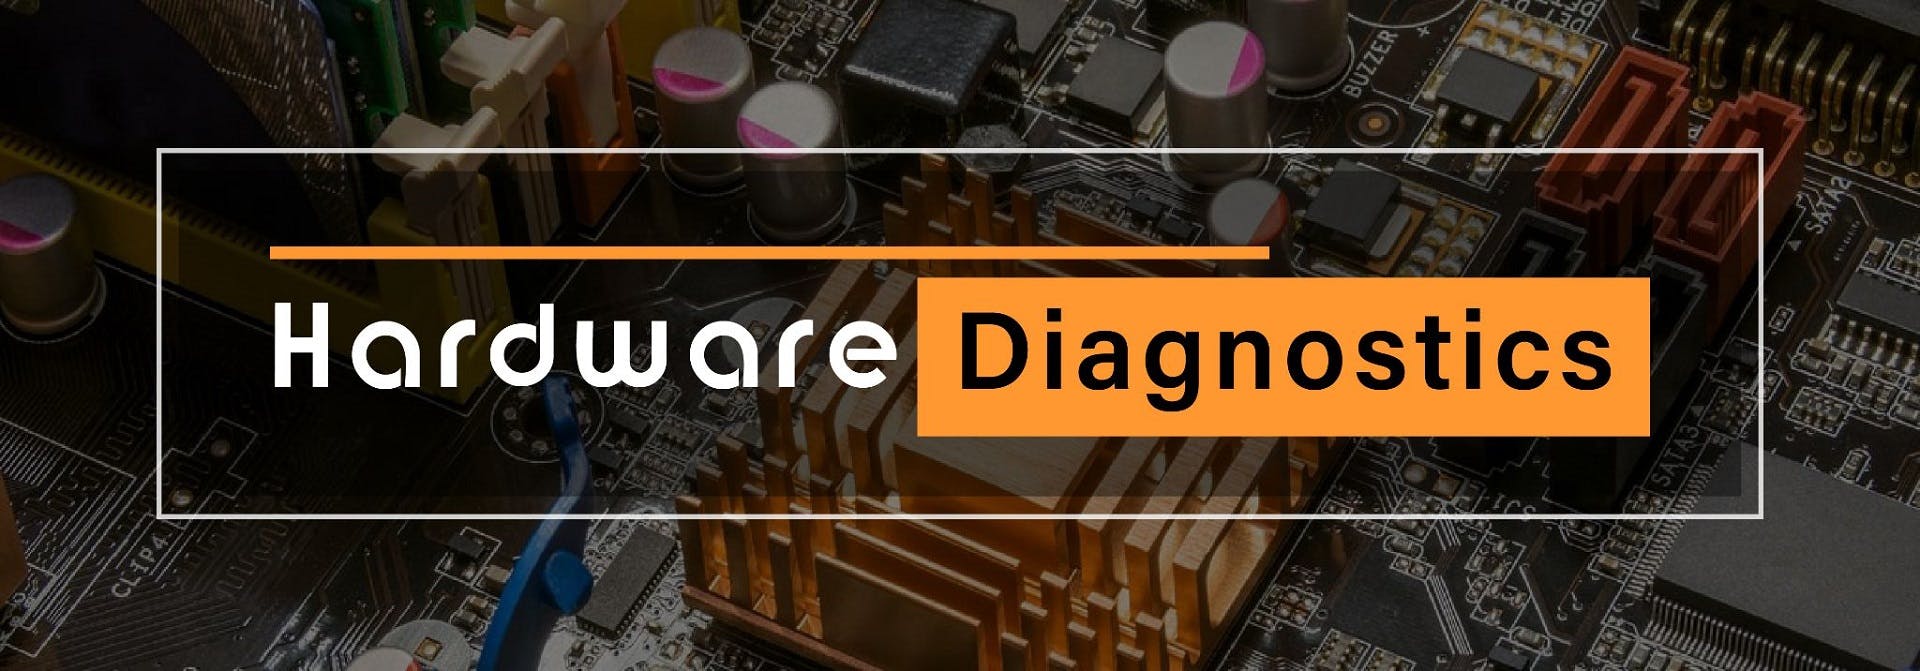 Hardware Diagnostics.jpg